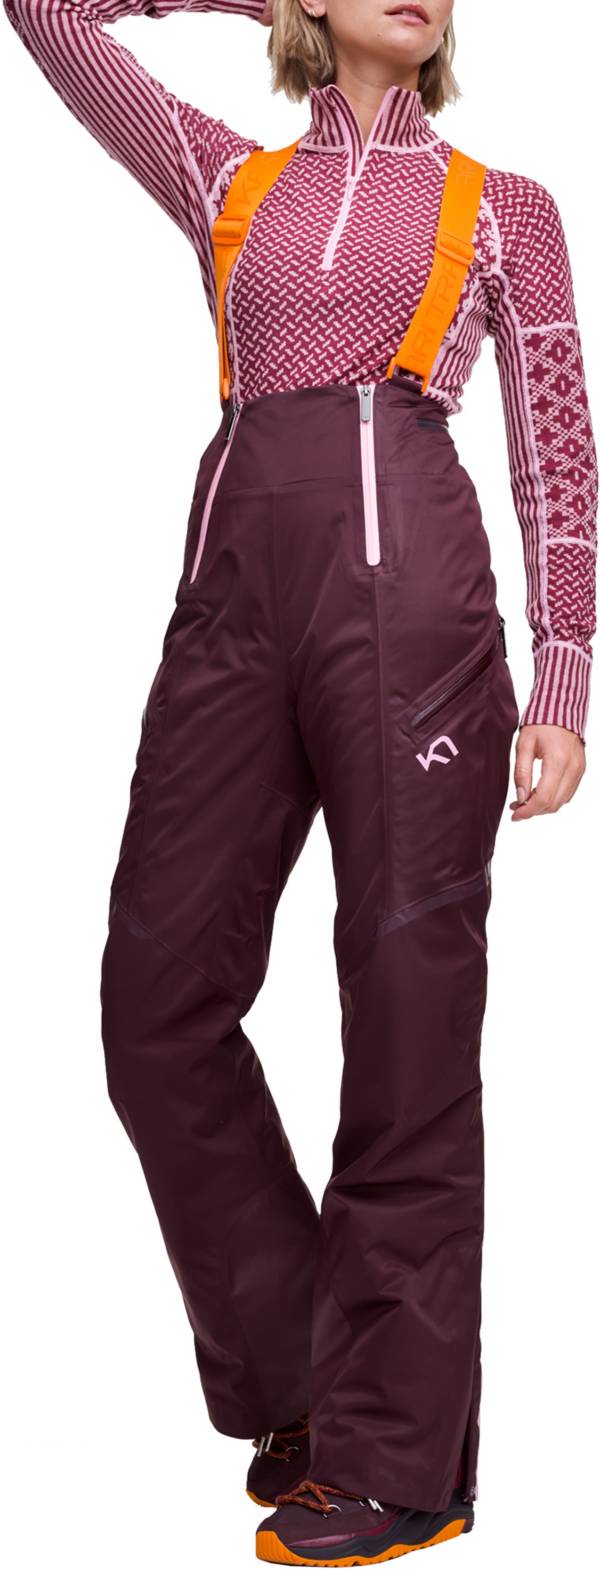 Kari Traa Women's Voss Ski Pants product image